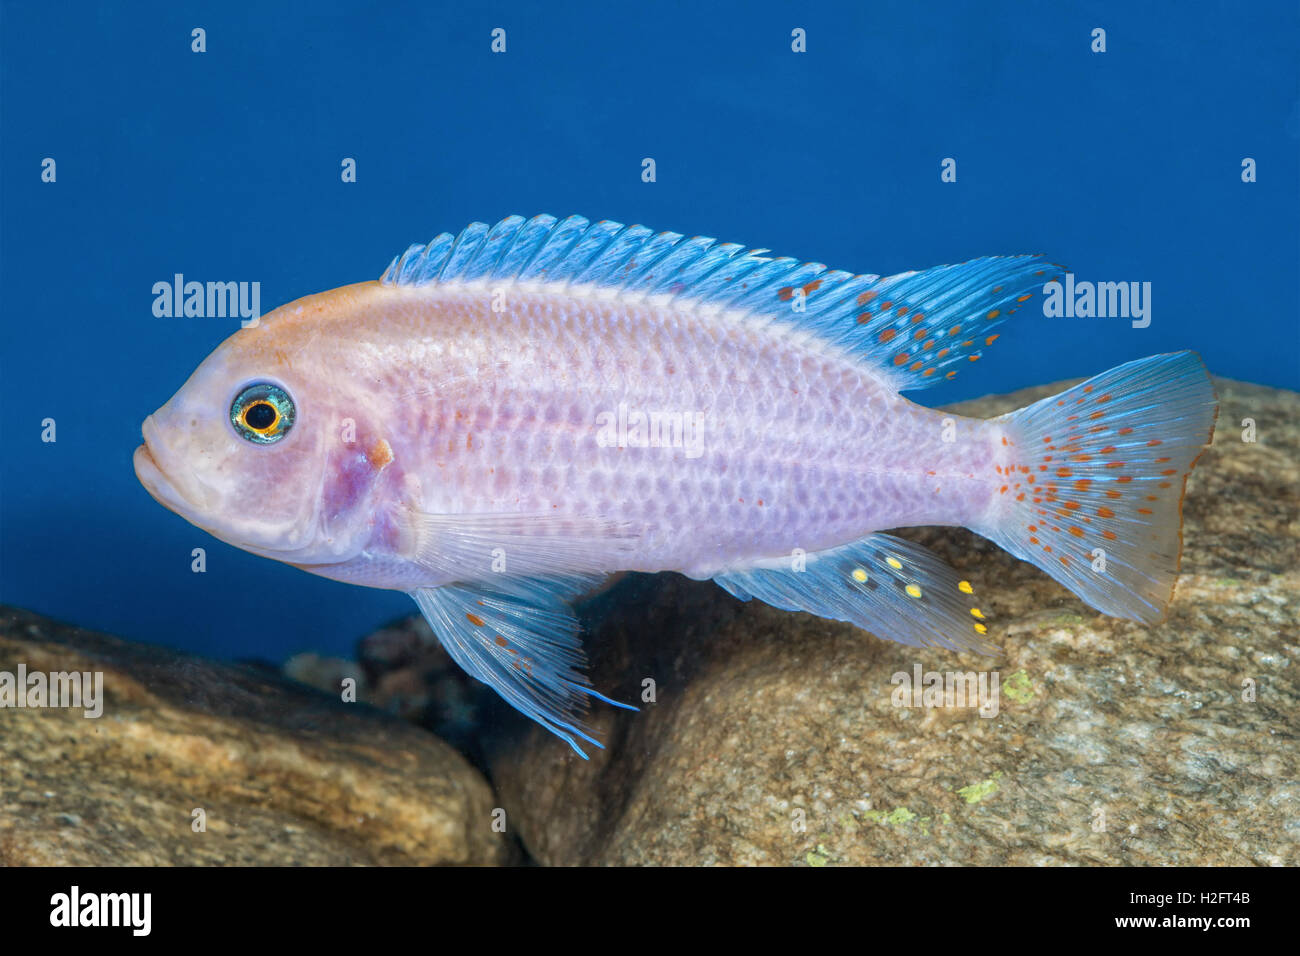 Portrait of freshwater cichlid fish (Maylandia zebra) in aquarium Stock Photo